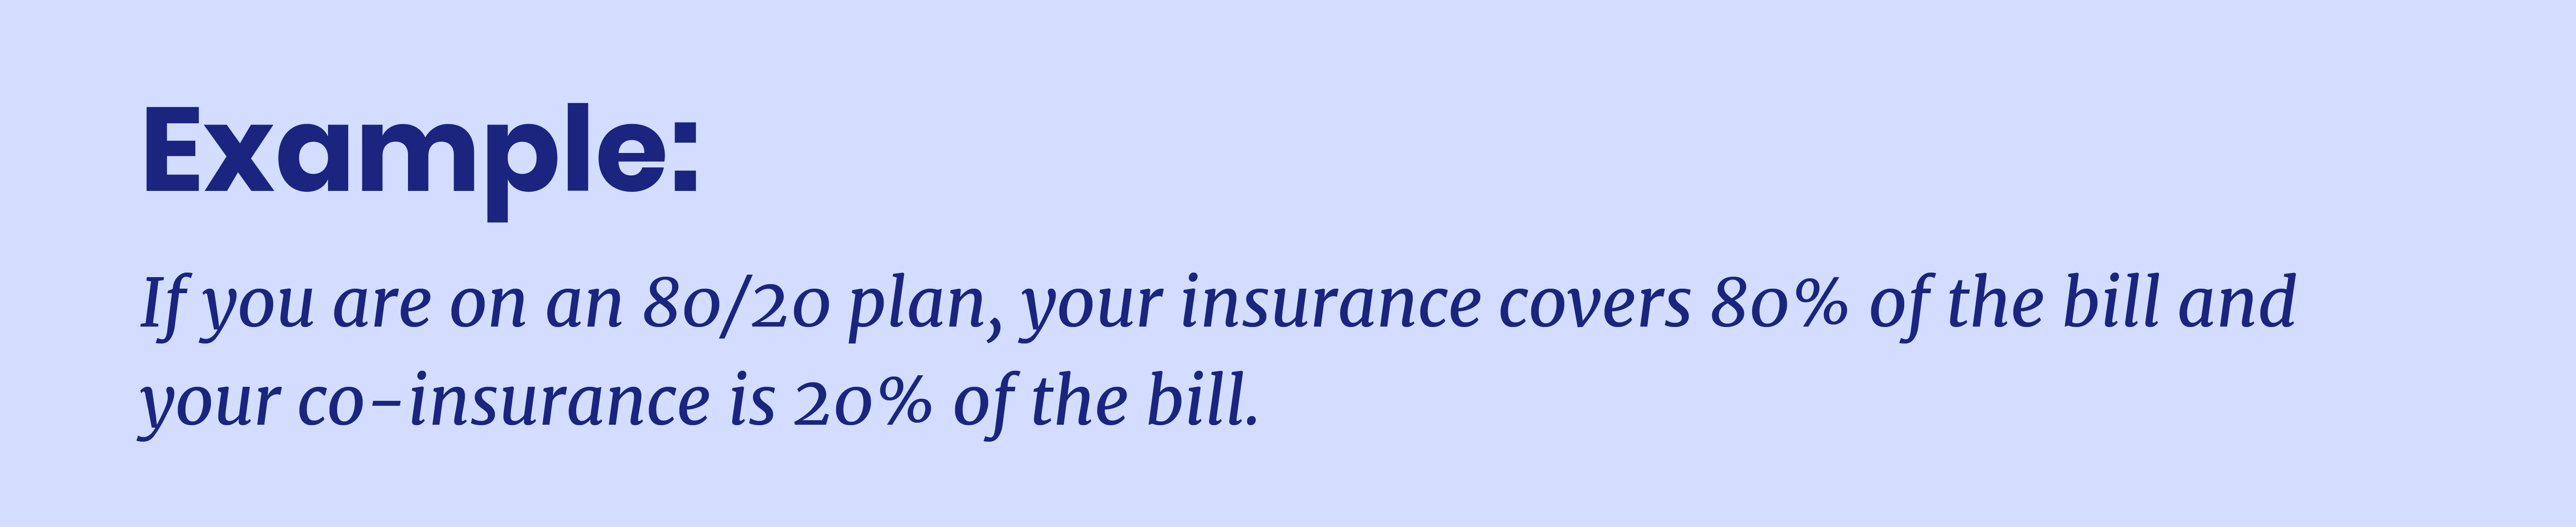 employer provided insurance benefits example 